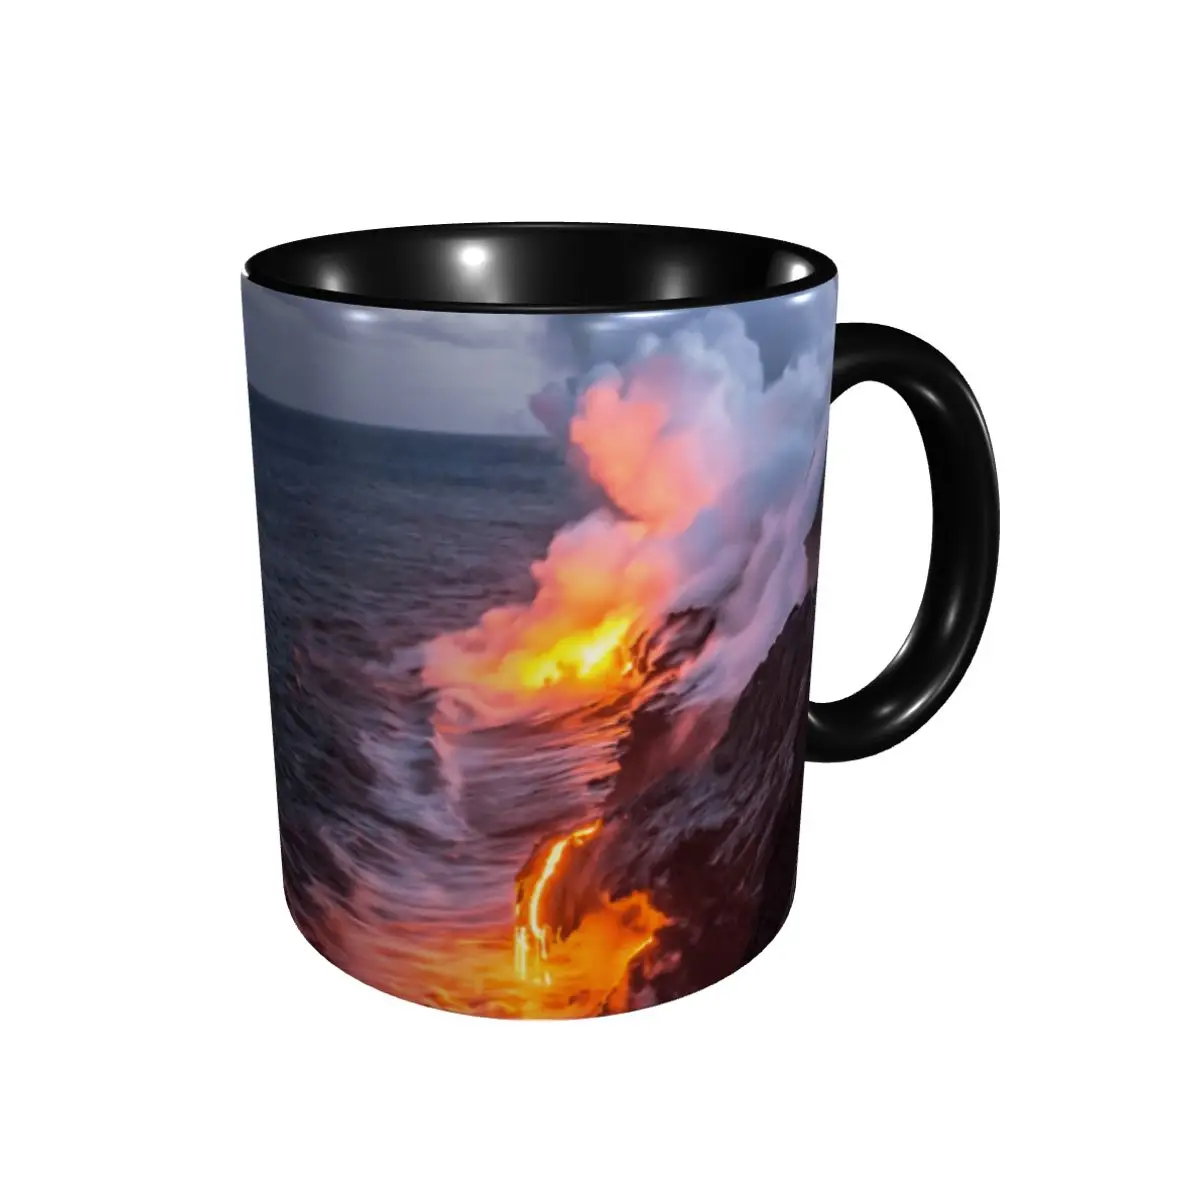 

Promo Kilauea Tonga Volcano Lava Flow Sea Entry 7 Mugs Funny Graphic Cups Mugs Print Funny Novelty Lava beer mugs